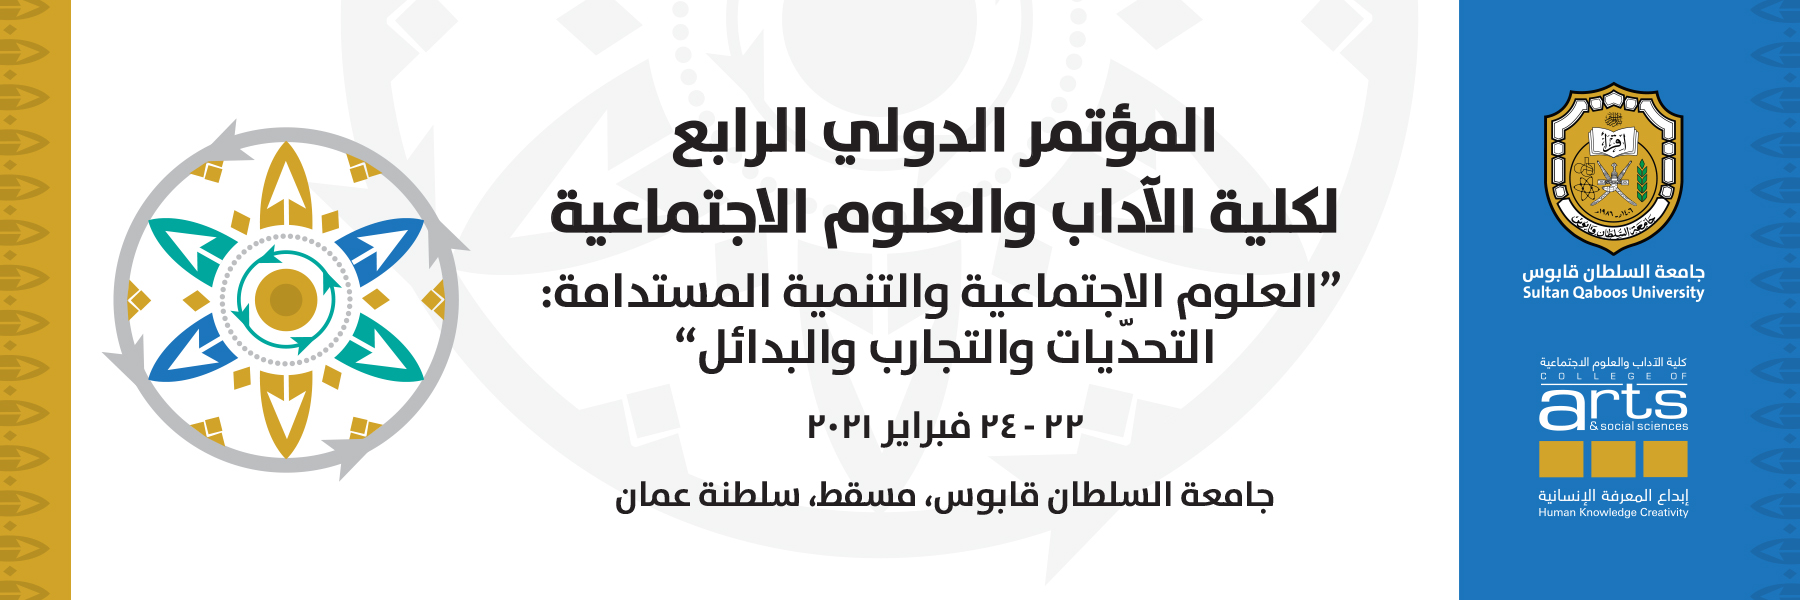 web bannar arabic (1)